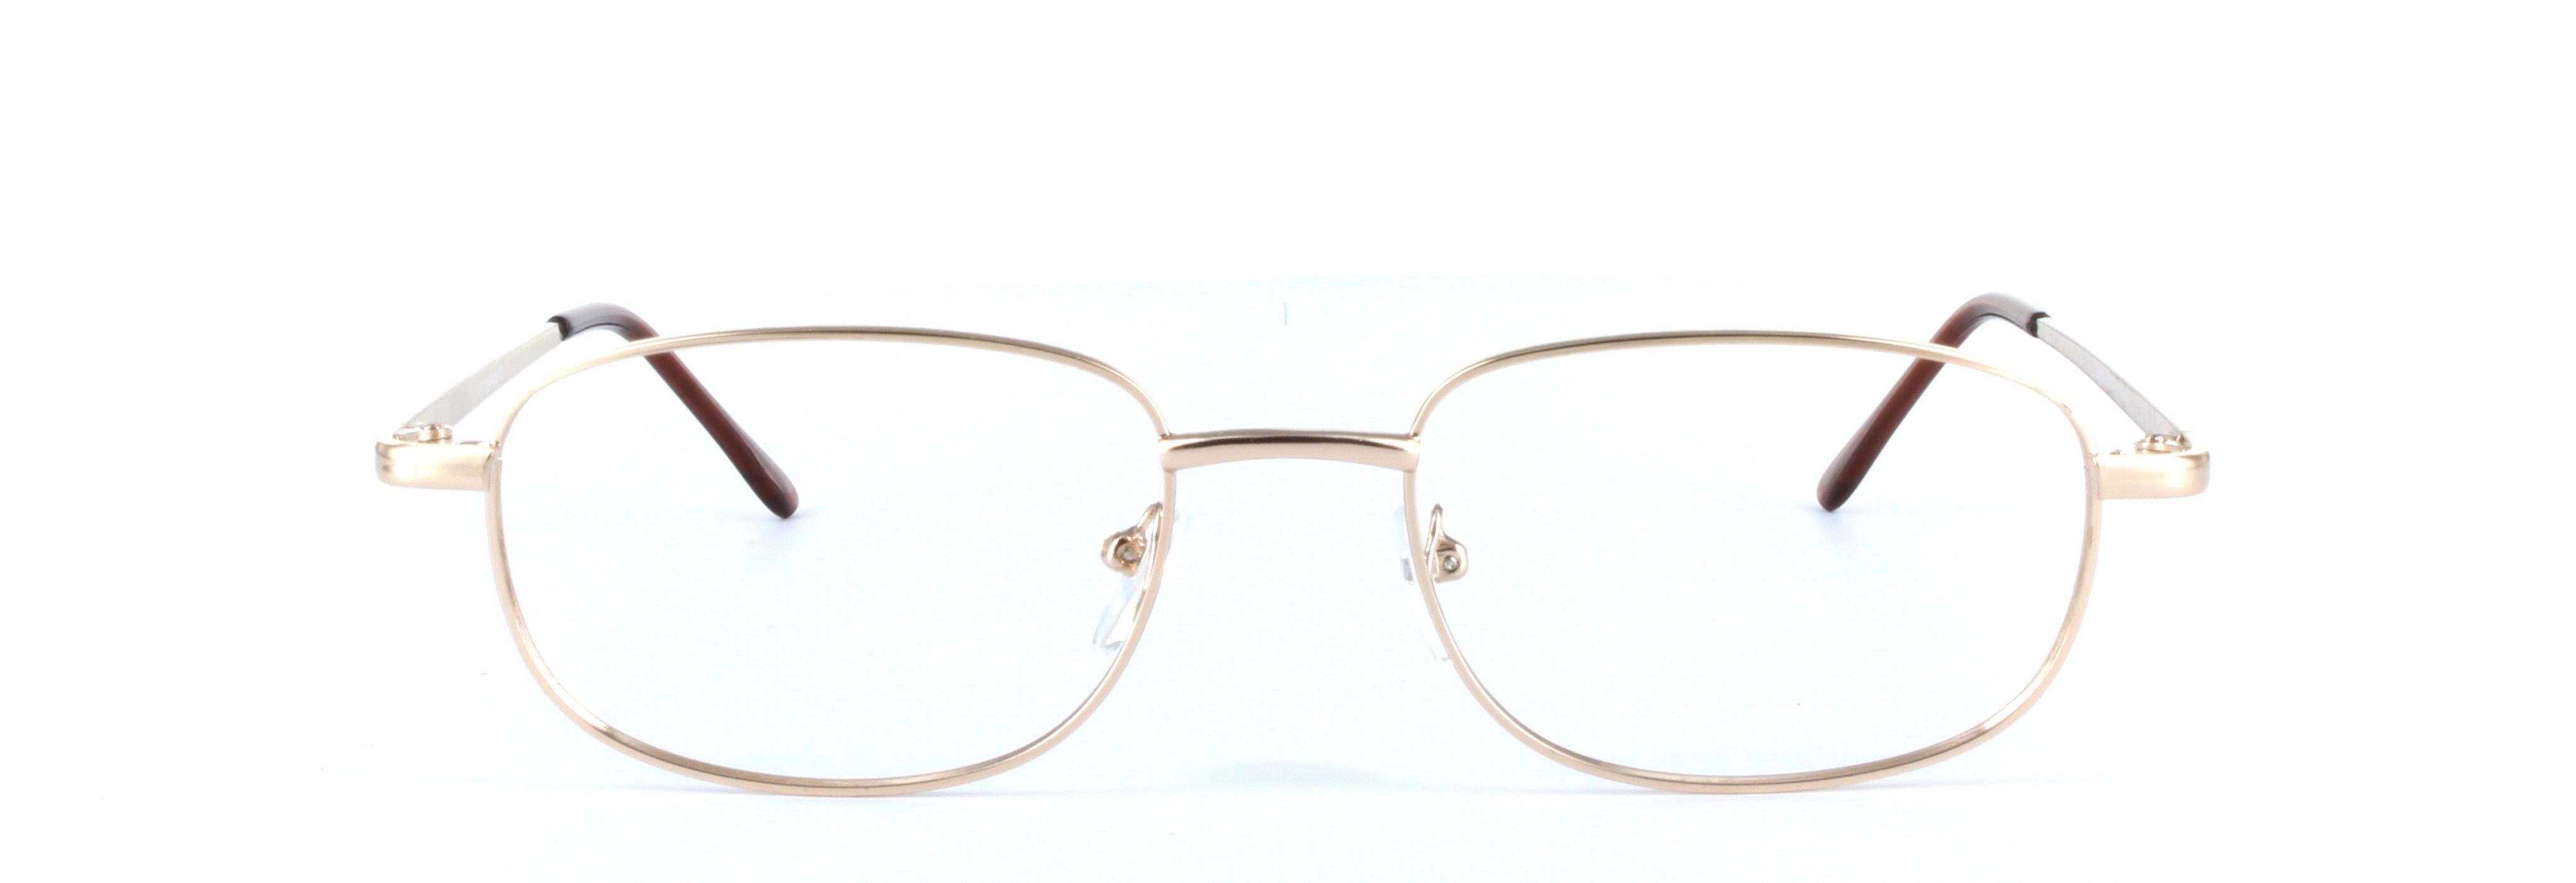 Ashton Gold Full Rim Rectangular Metal Glasses - Image View 5